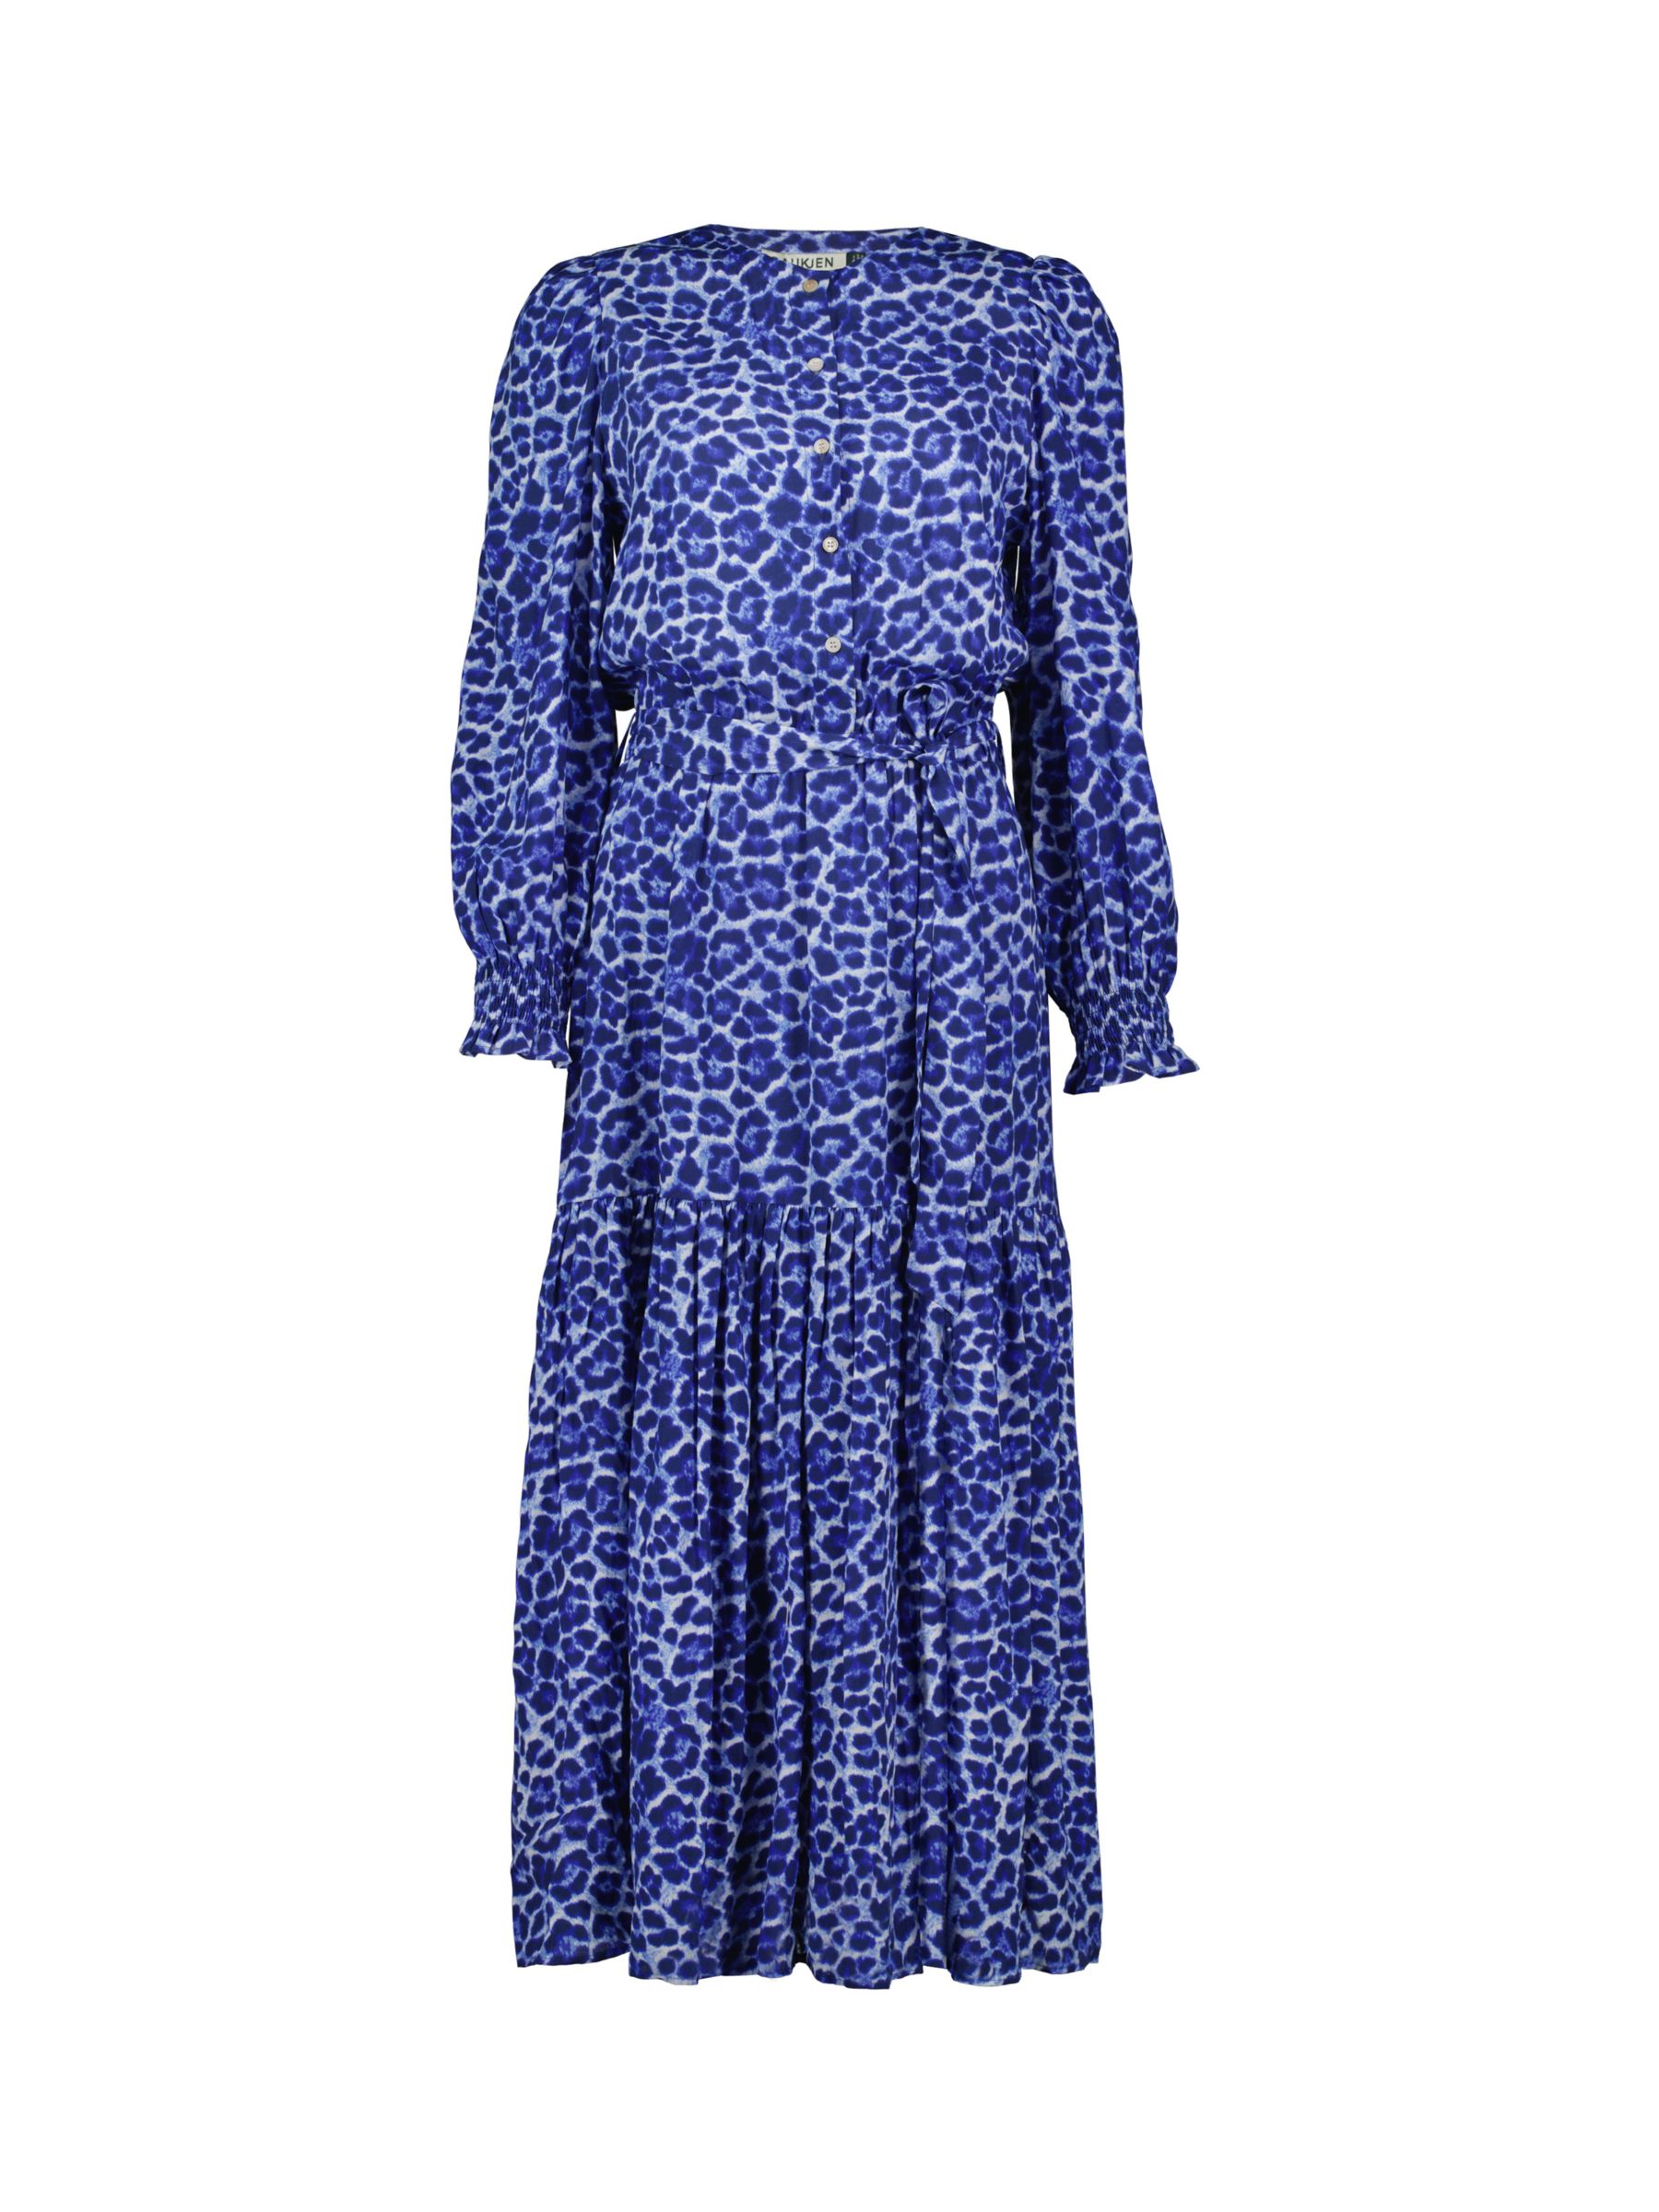 Baukjen Eloisa Leopard Print Midi Dress, Blue at John Lewis & Partners